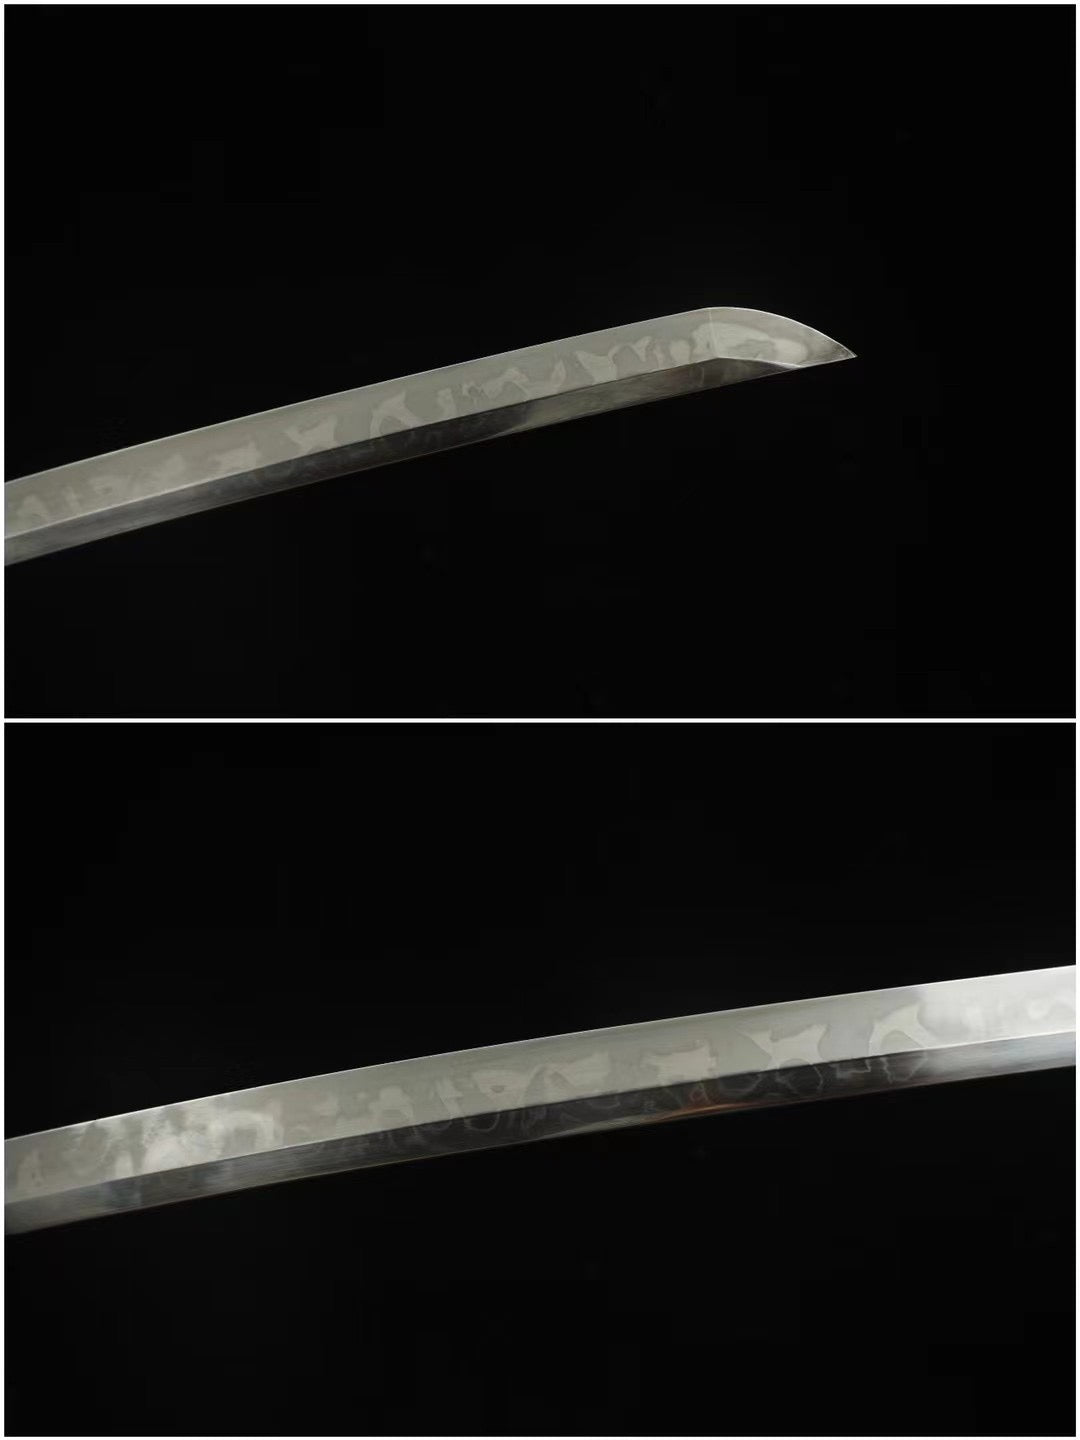 Spring Palace Tachi Sword,Japanese Samurai Sword,Real Tachi Katana,Handmade sword,Clay tempered T-10 steel with hamon